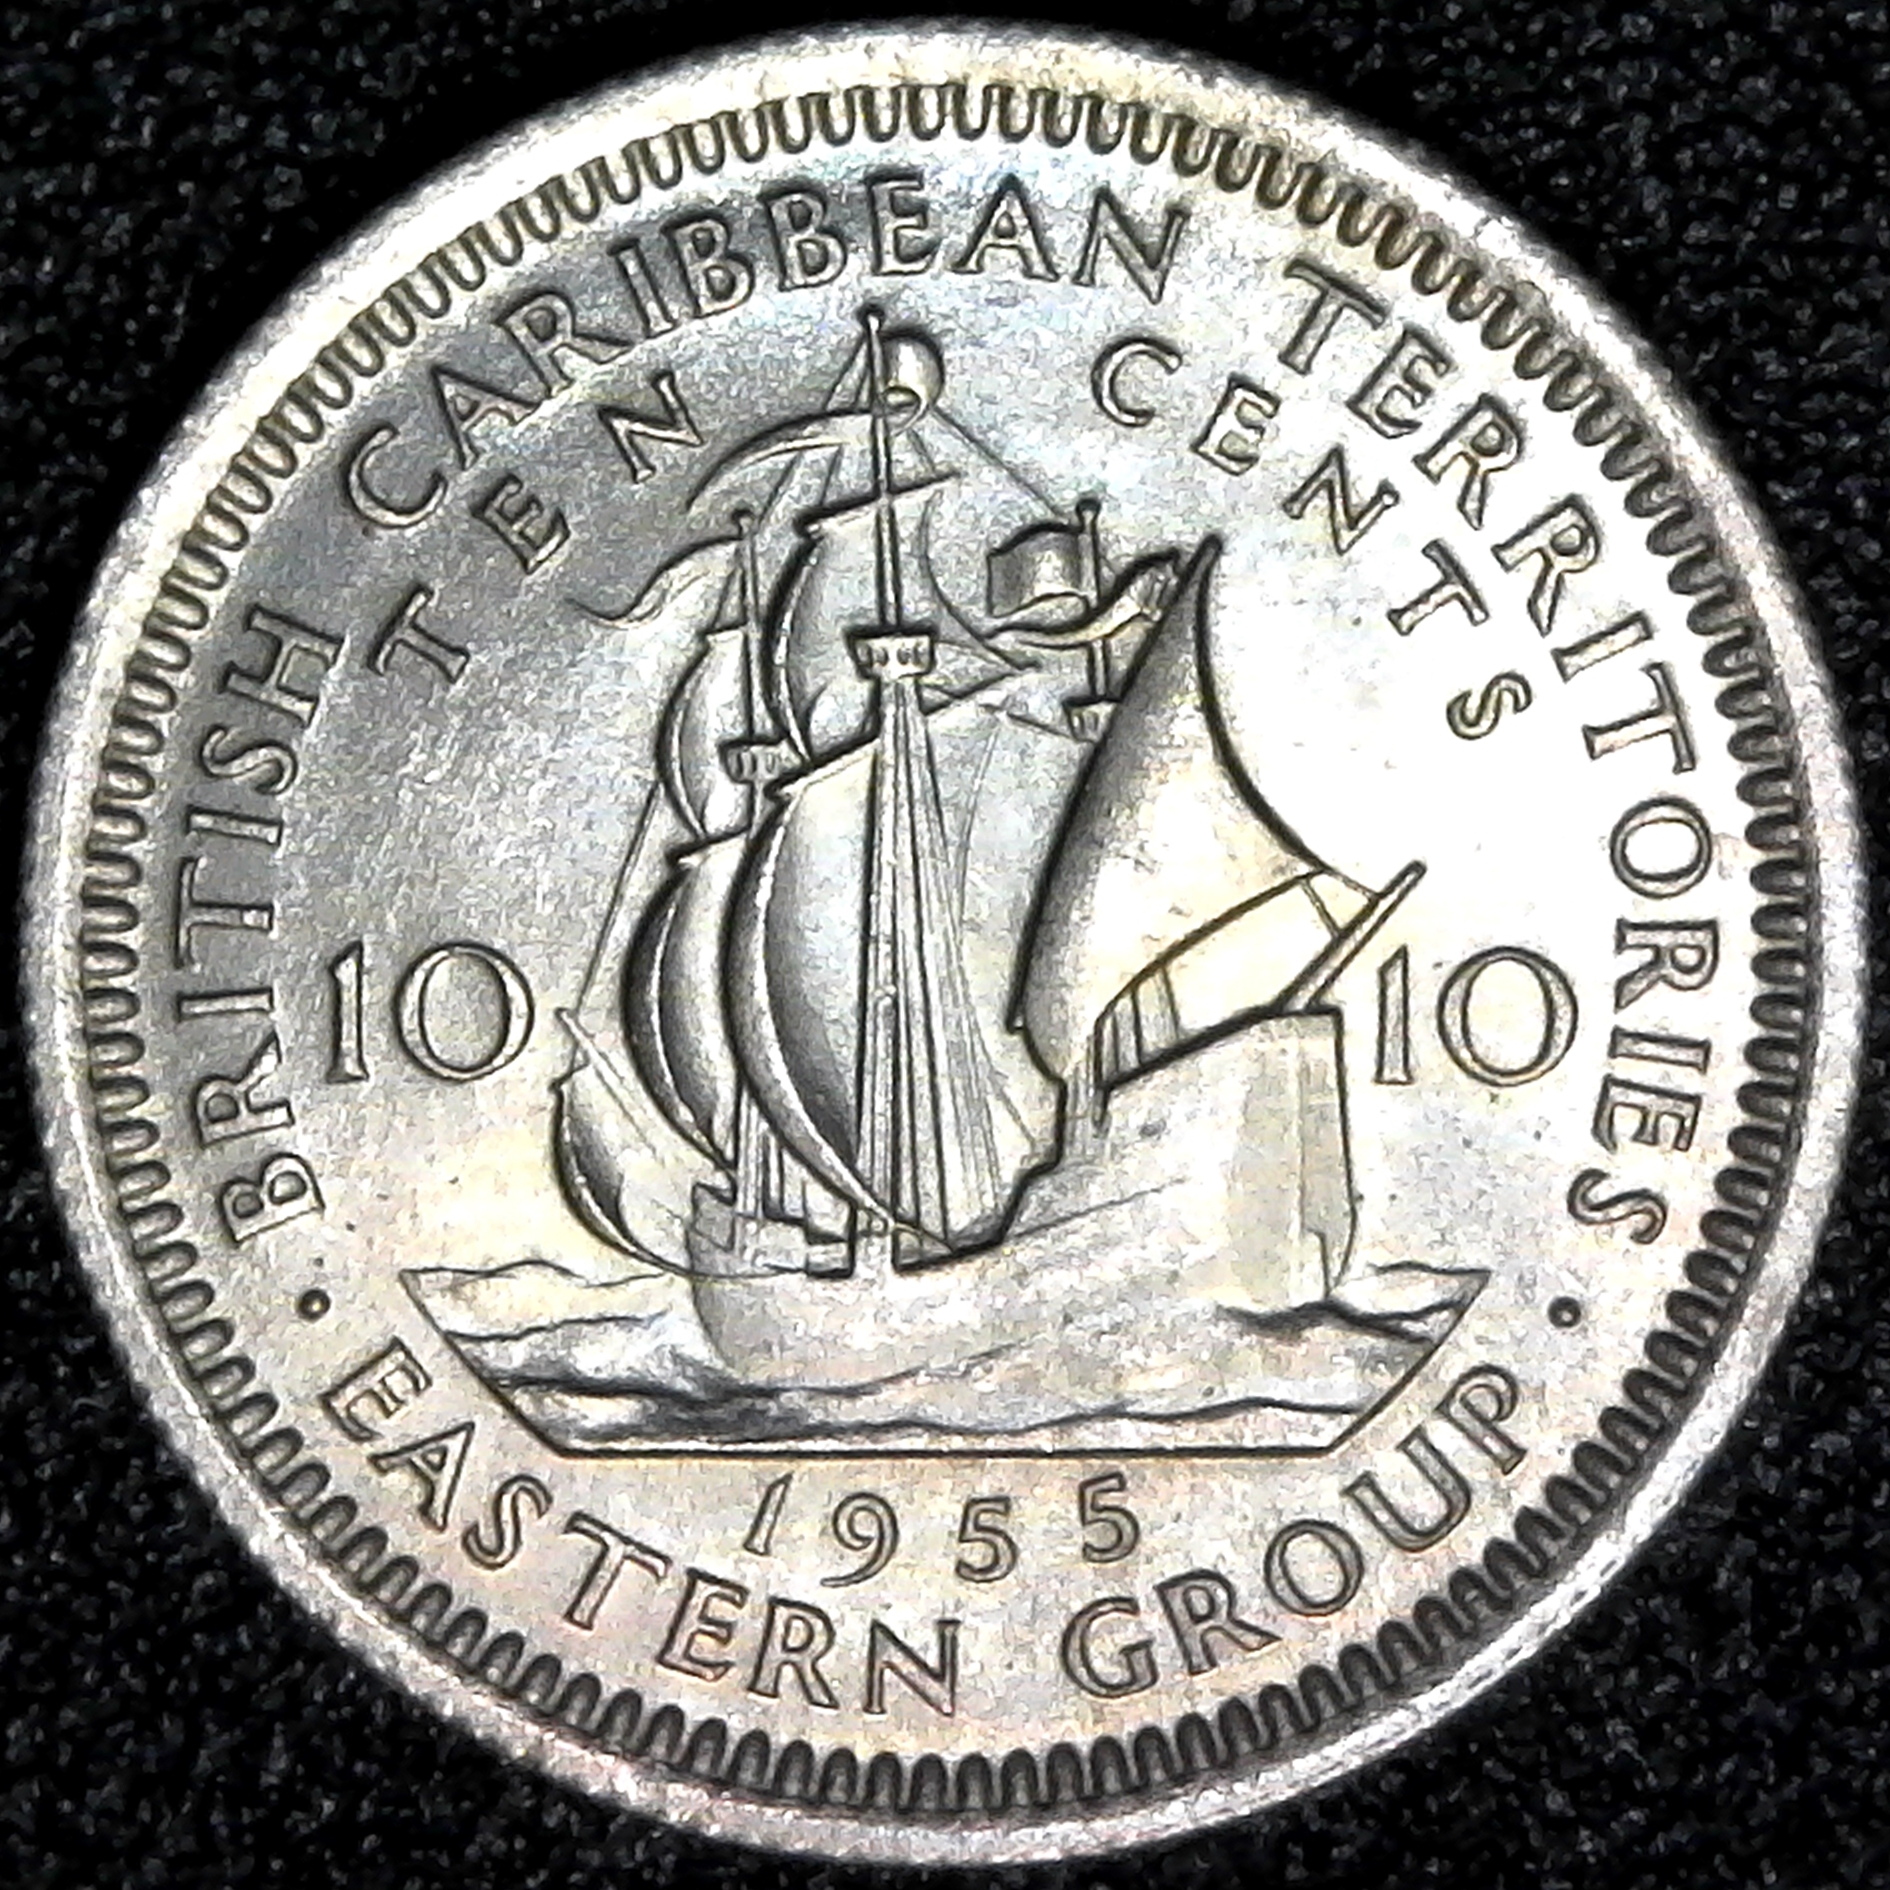 British Caribbean Territories 10 cents 1955 rev.jpg